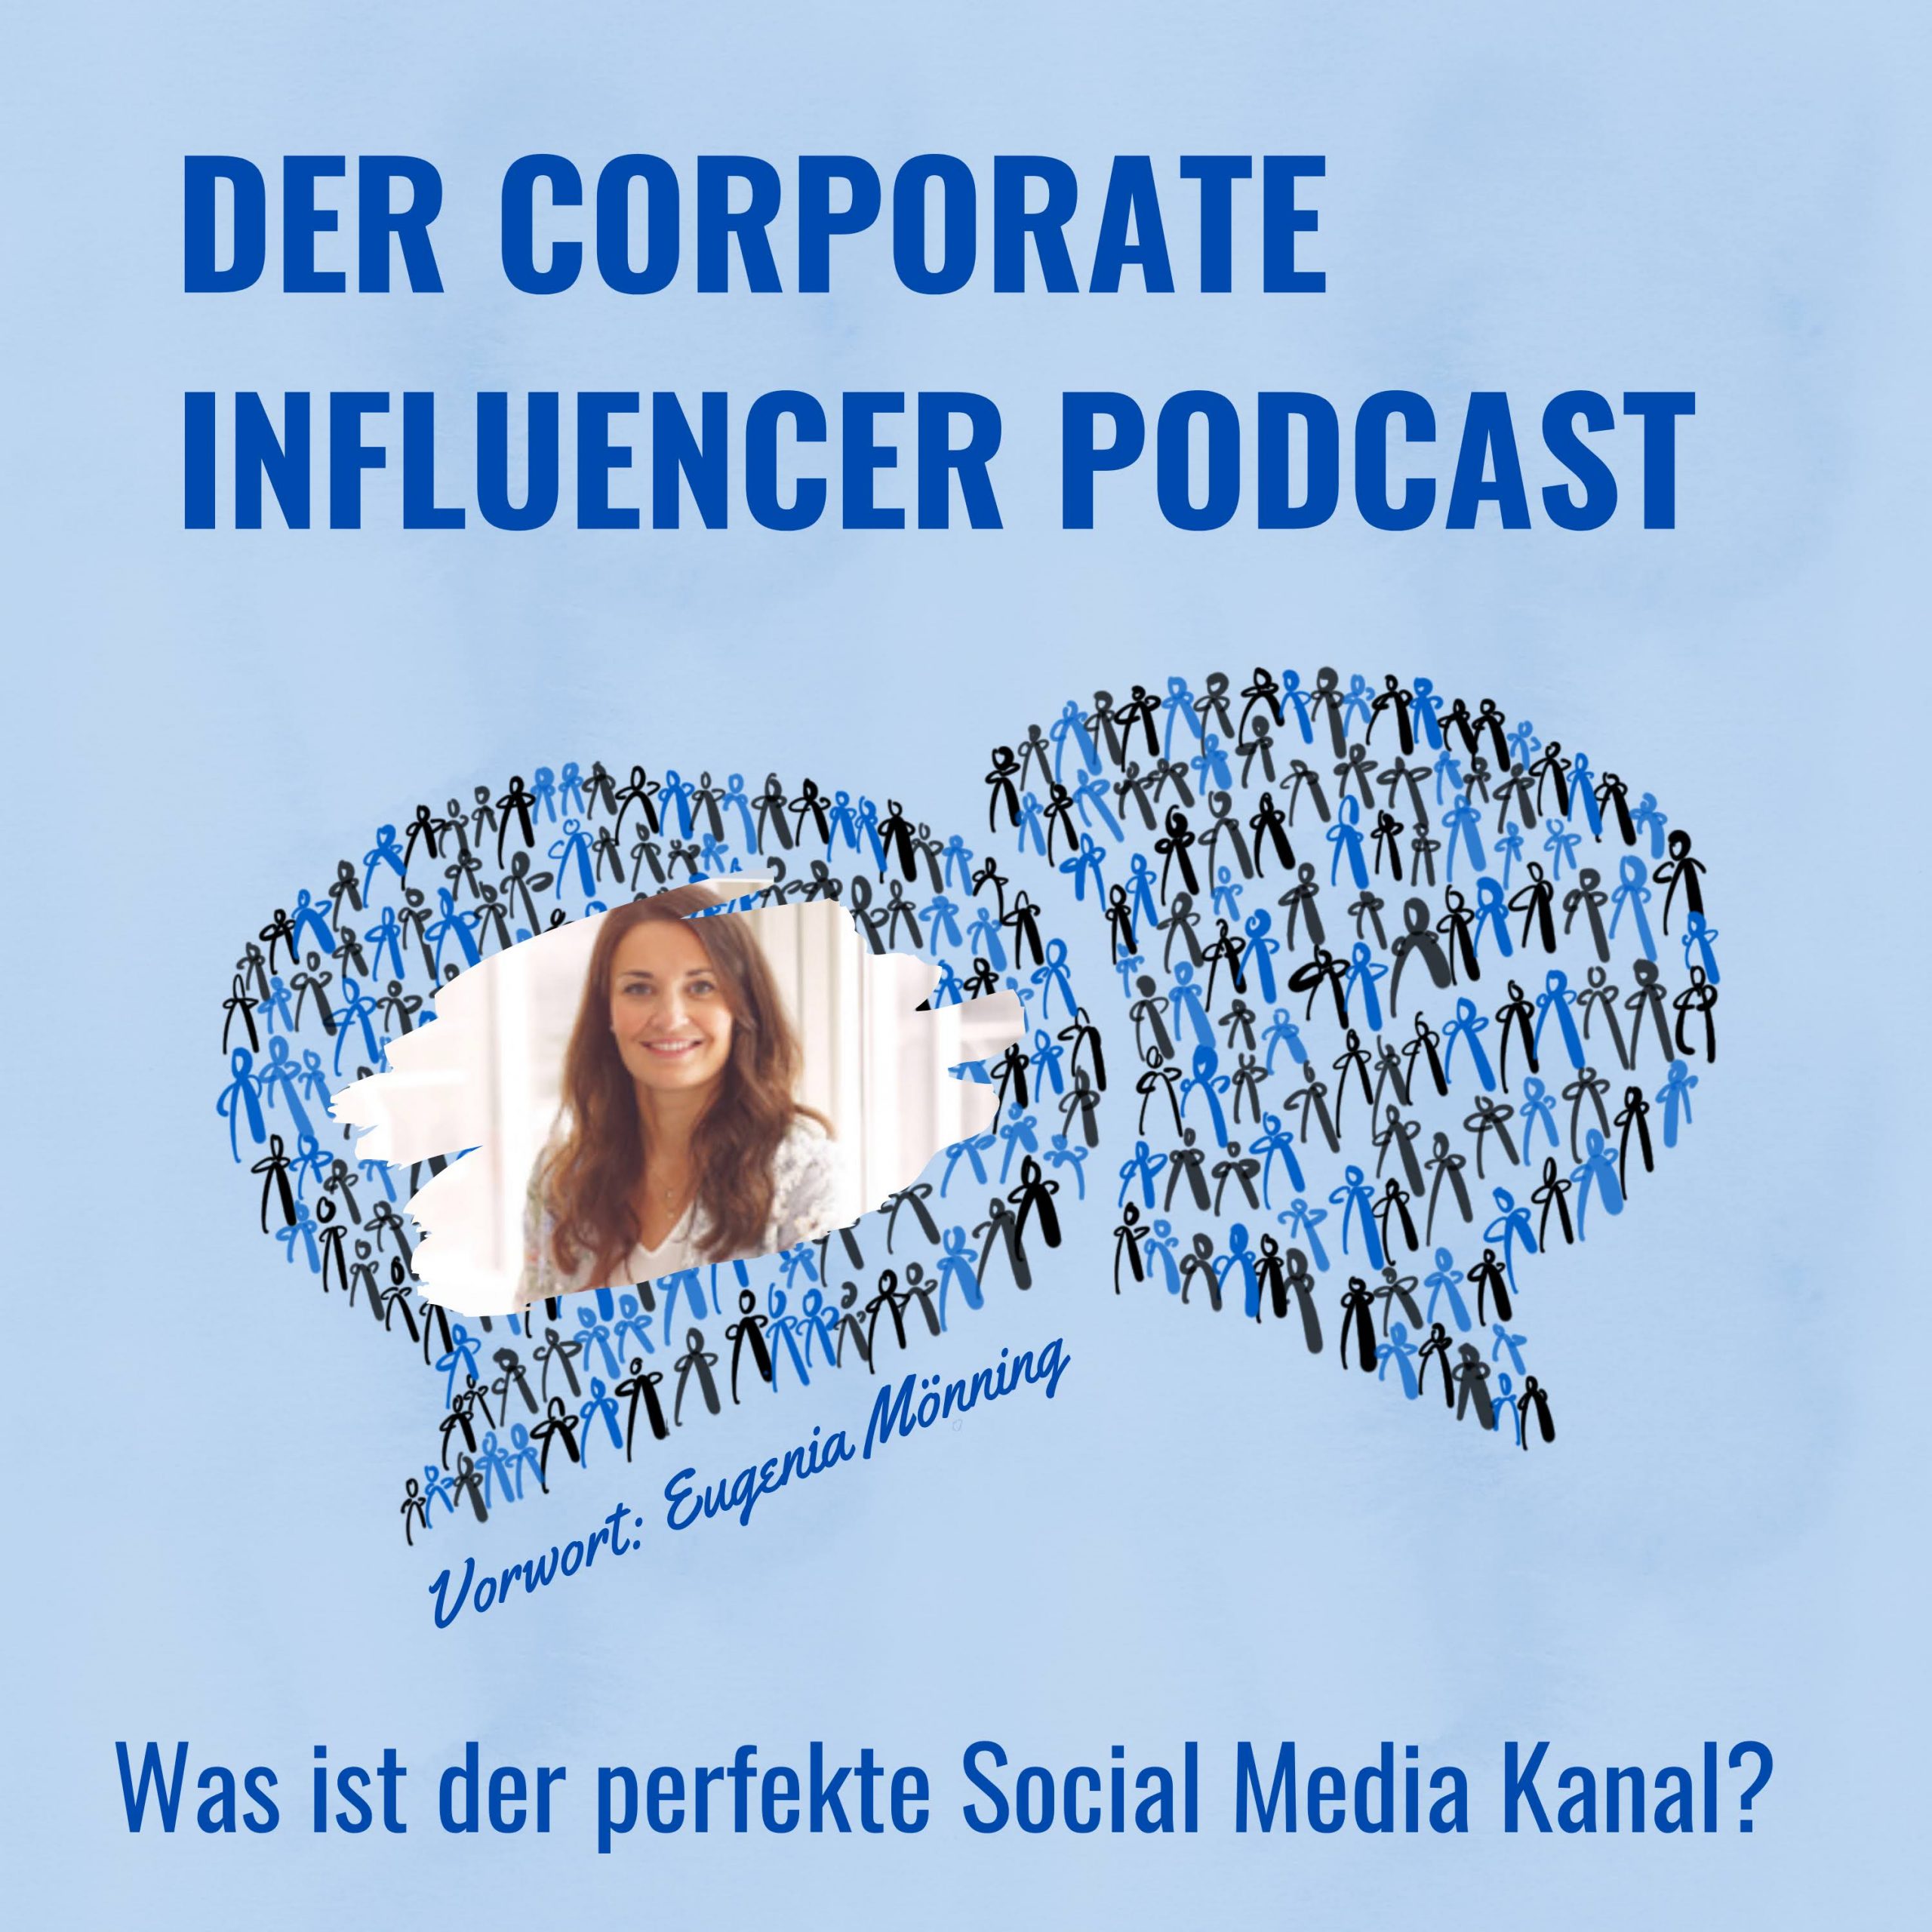 Der Corporate Influencer Podcast - Episode Kanäle